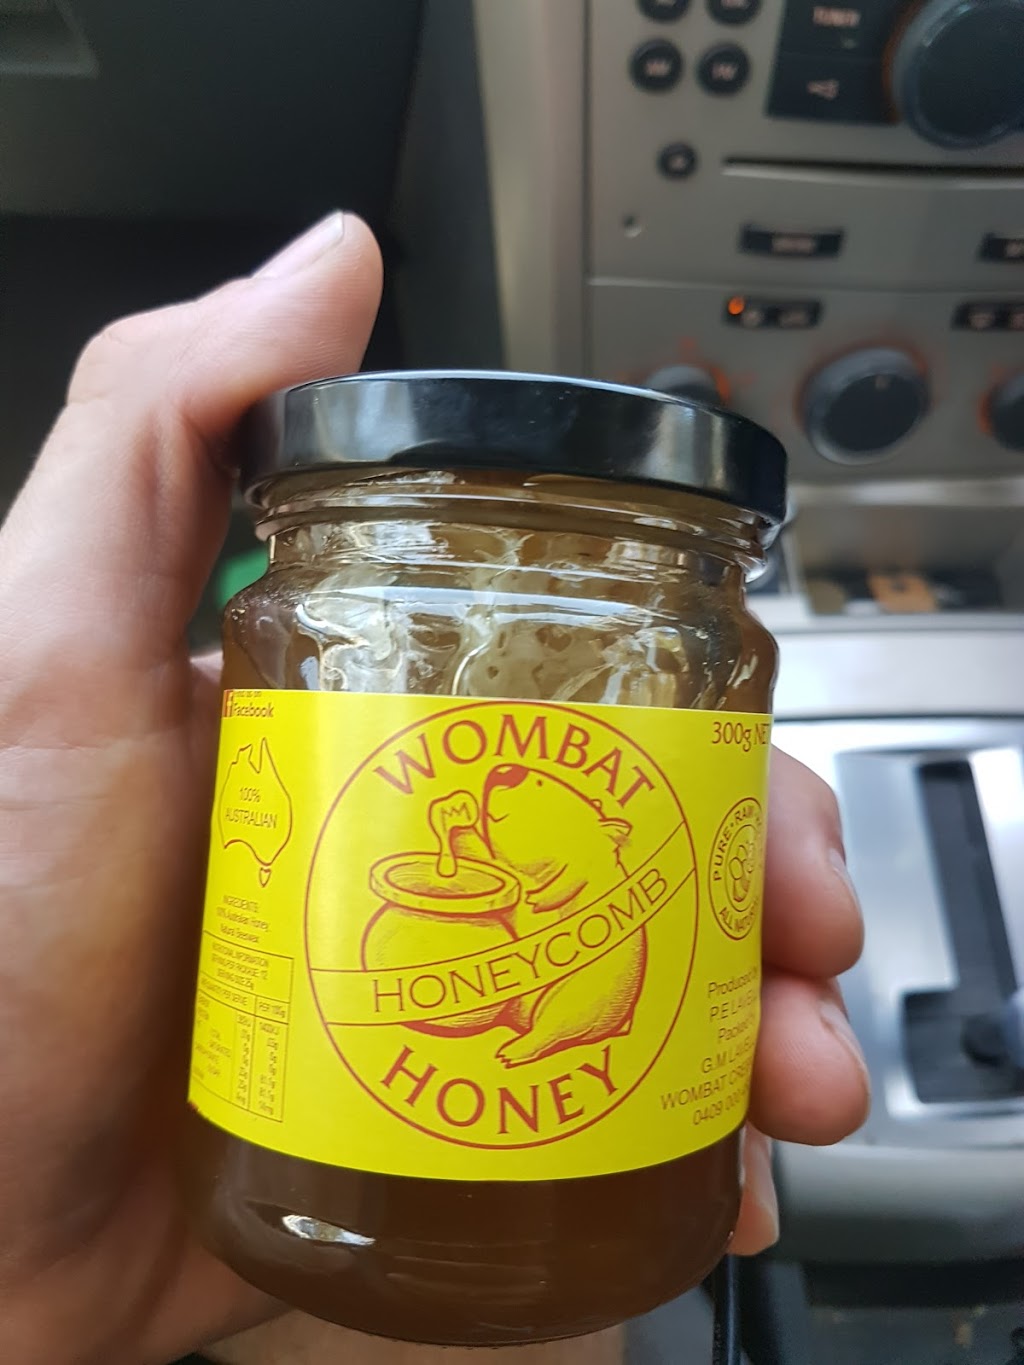 Wombat Honey Shop | home goods store | 3800 Princes Hwy, Wombat Creek VIC 3888, Australia